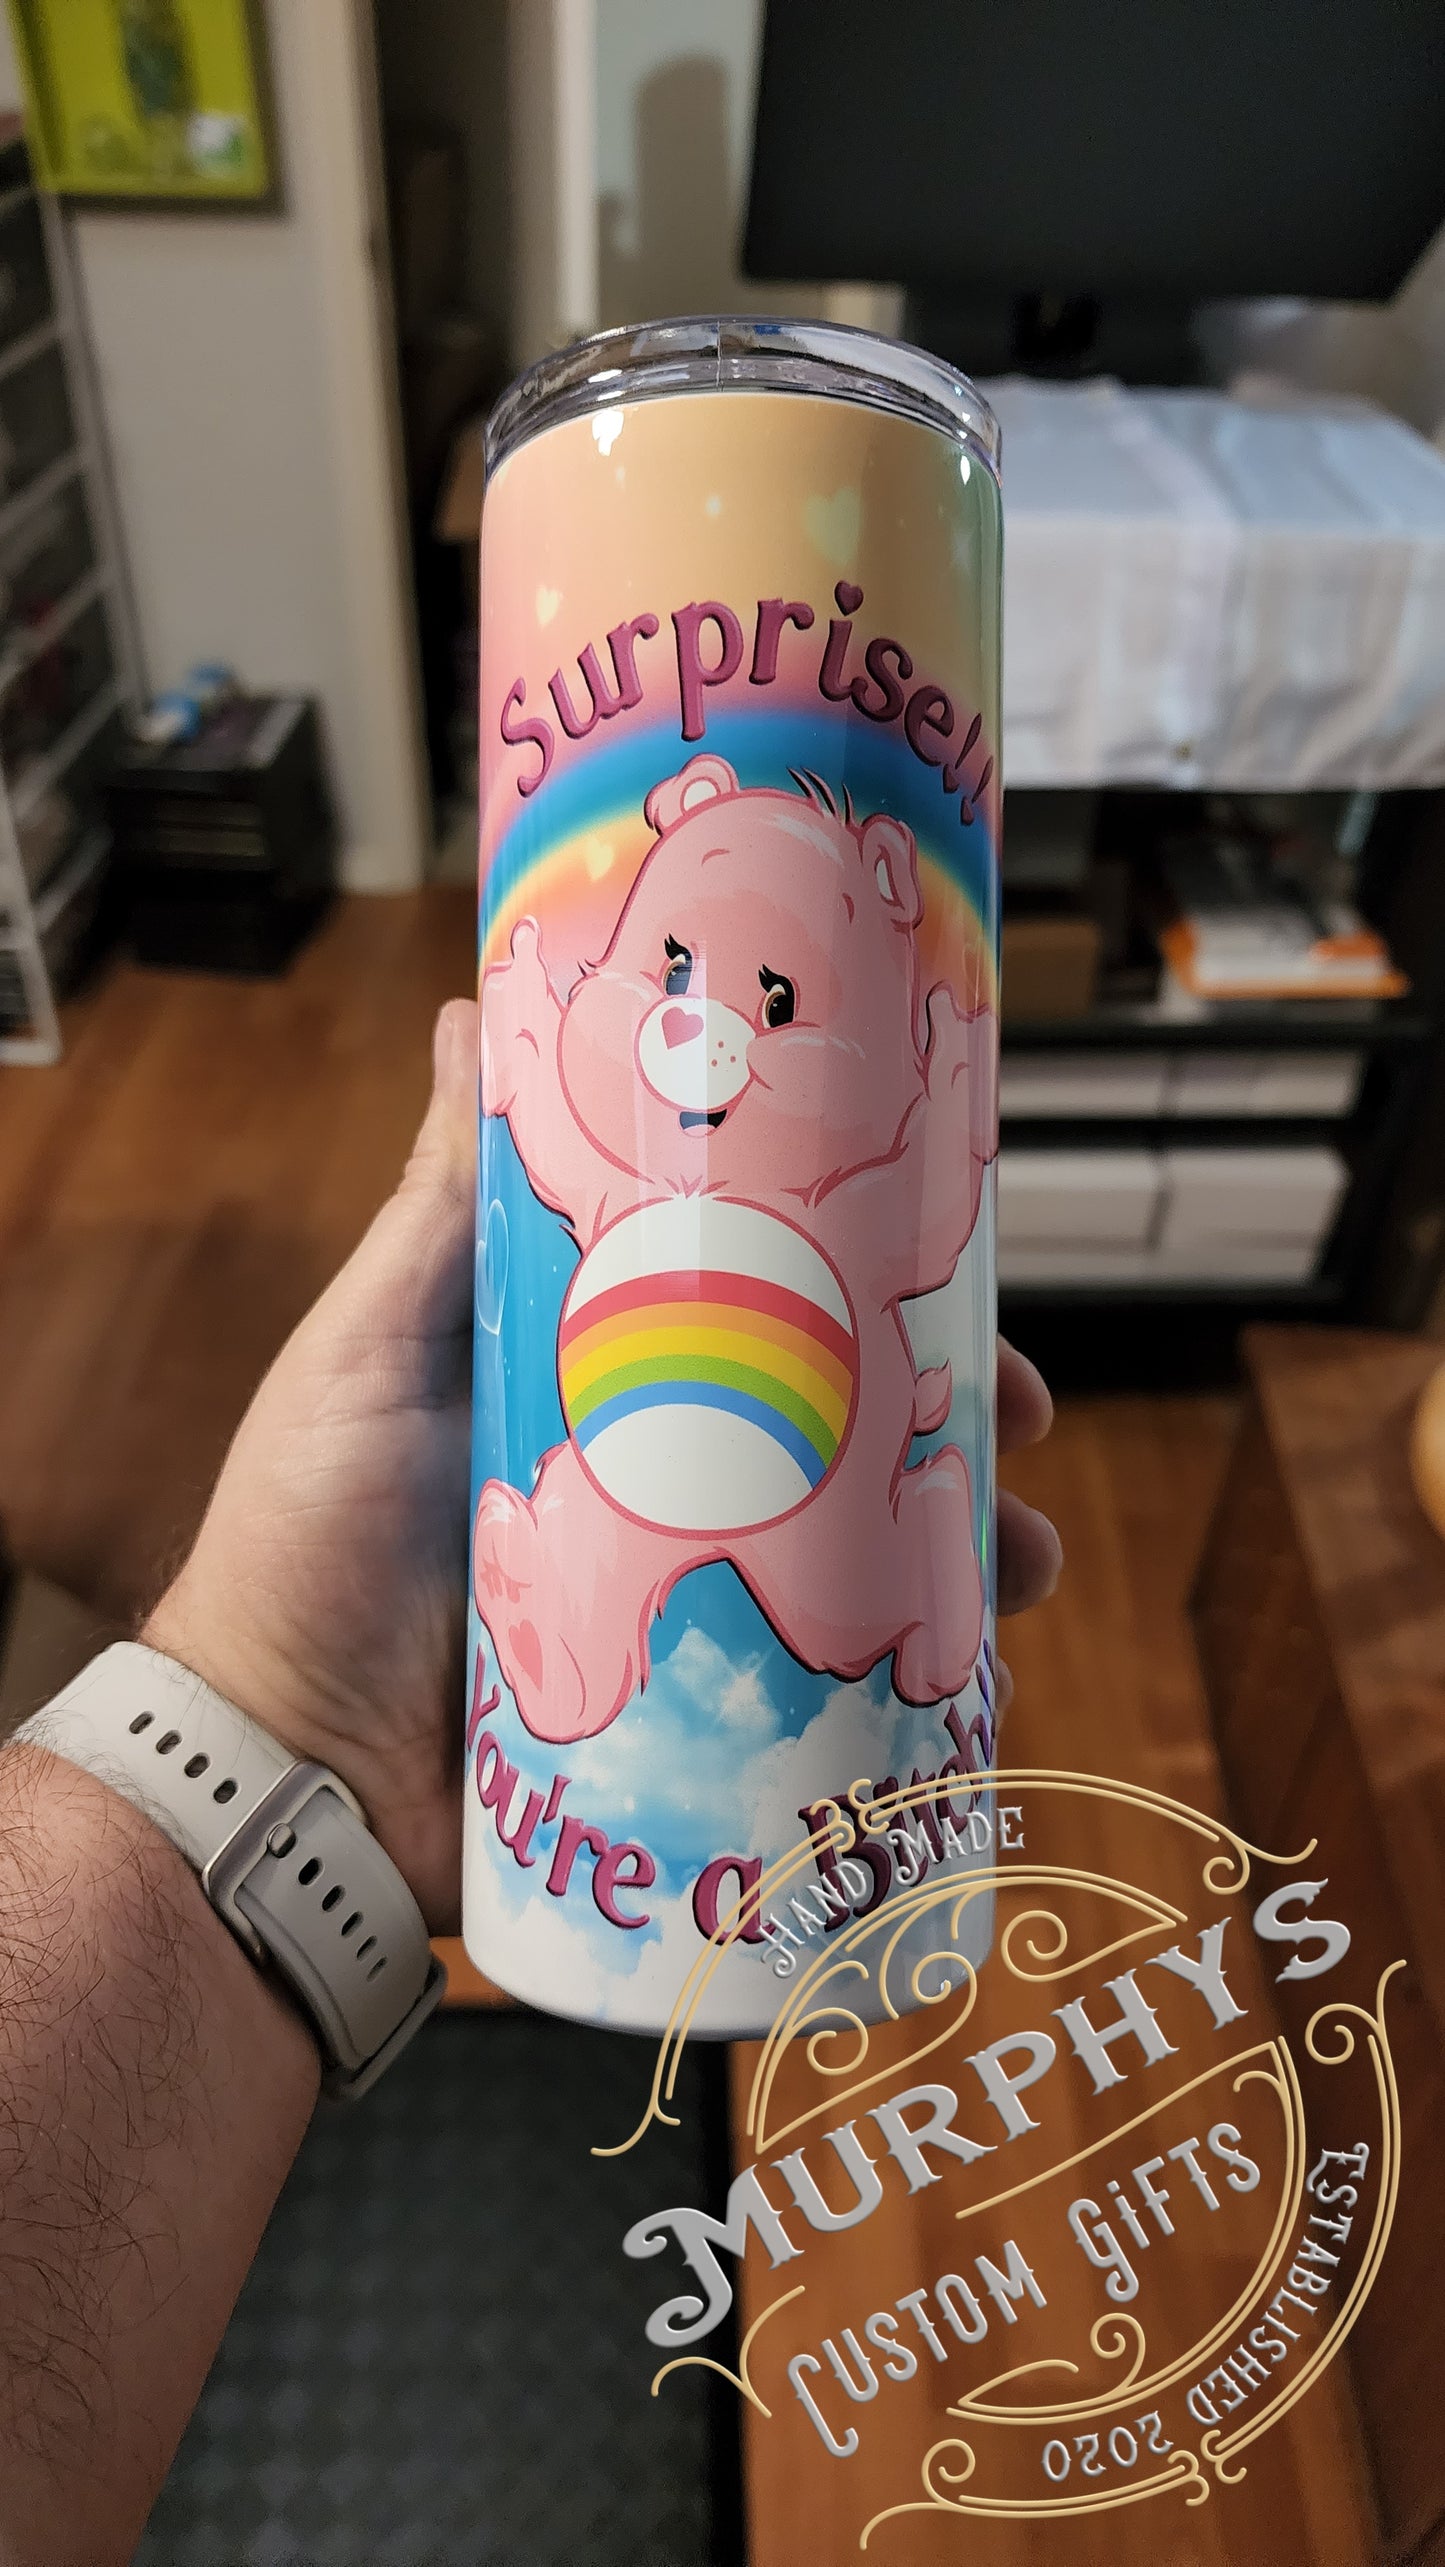 Bad Bear - Surprise You're A Bitch